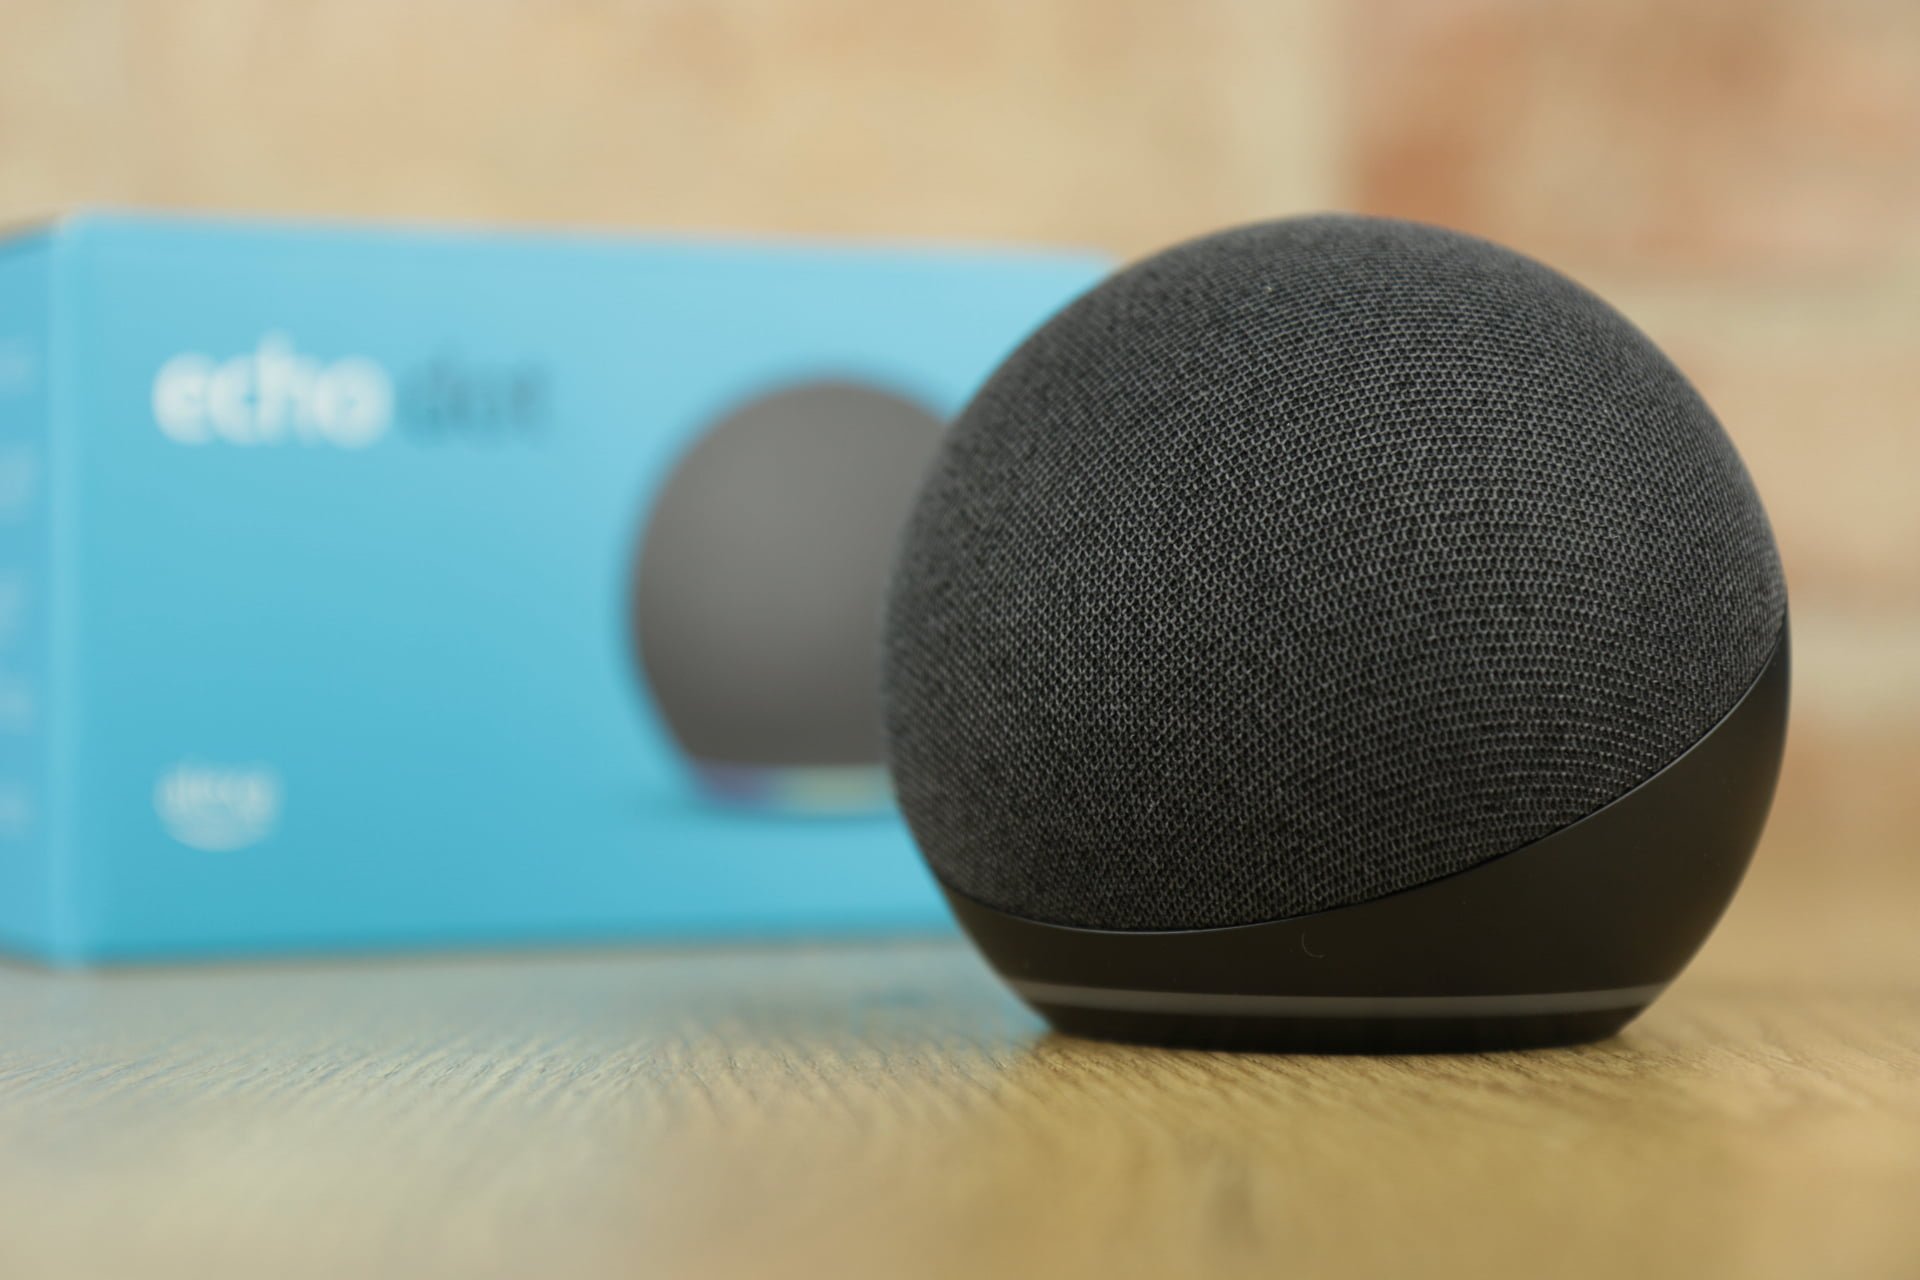 Amazon Echo Dot Alexa recenzja test